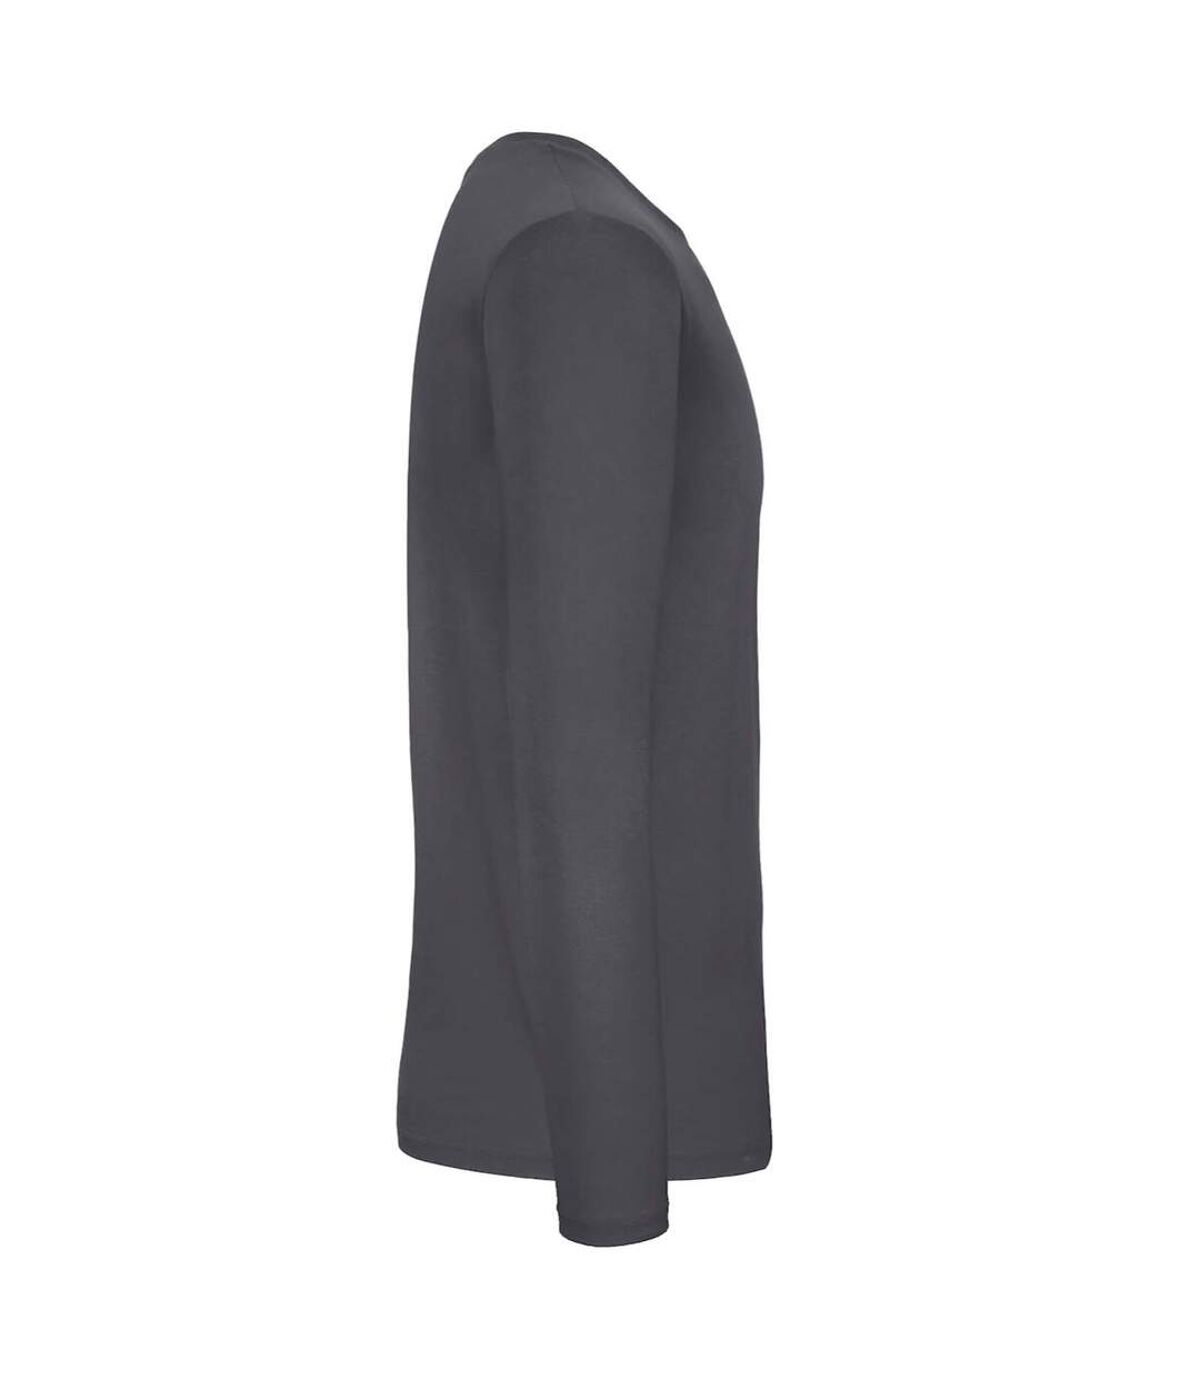 B&C Mens E150 Long Sleeve T-Shirt (Dark Gray) - UTRW6527